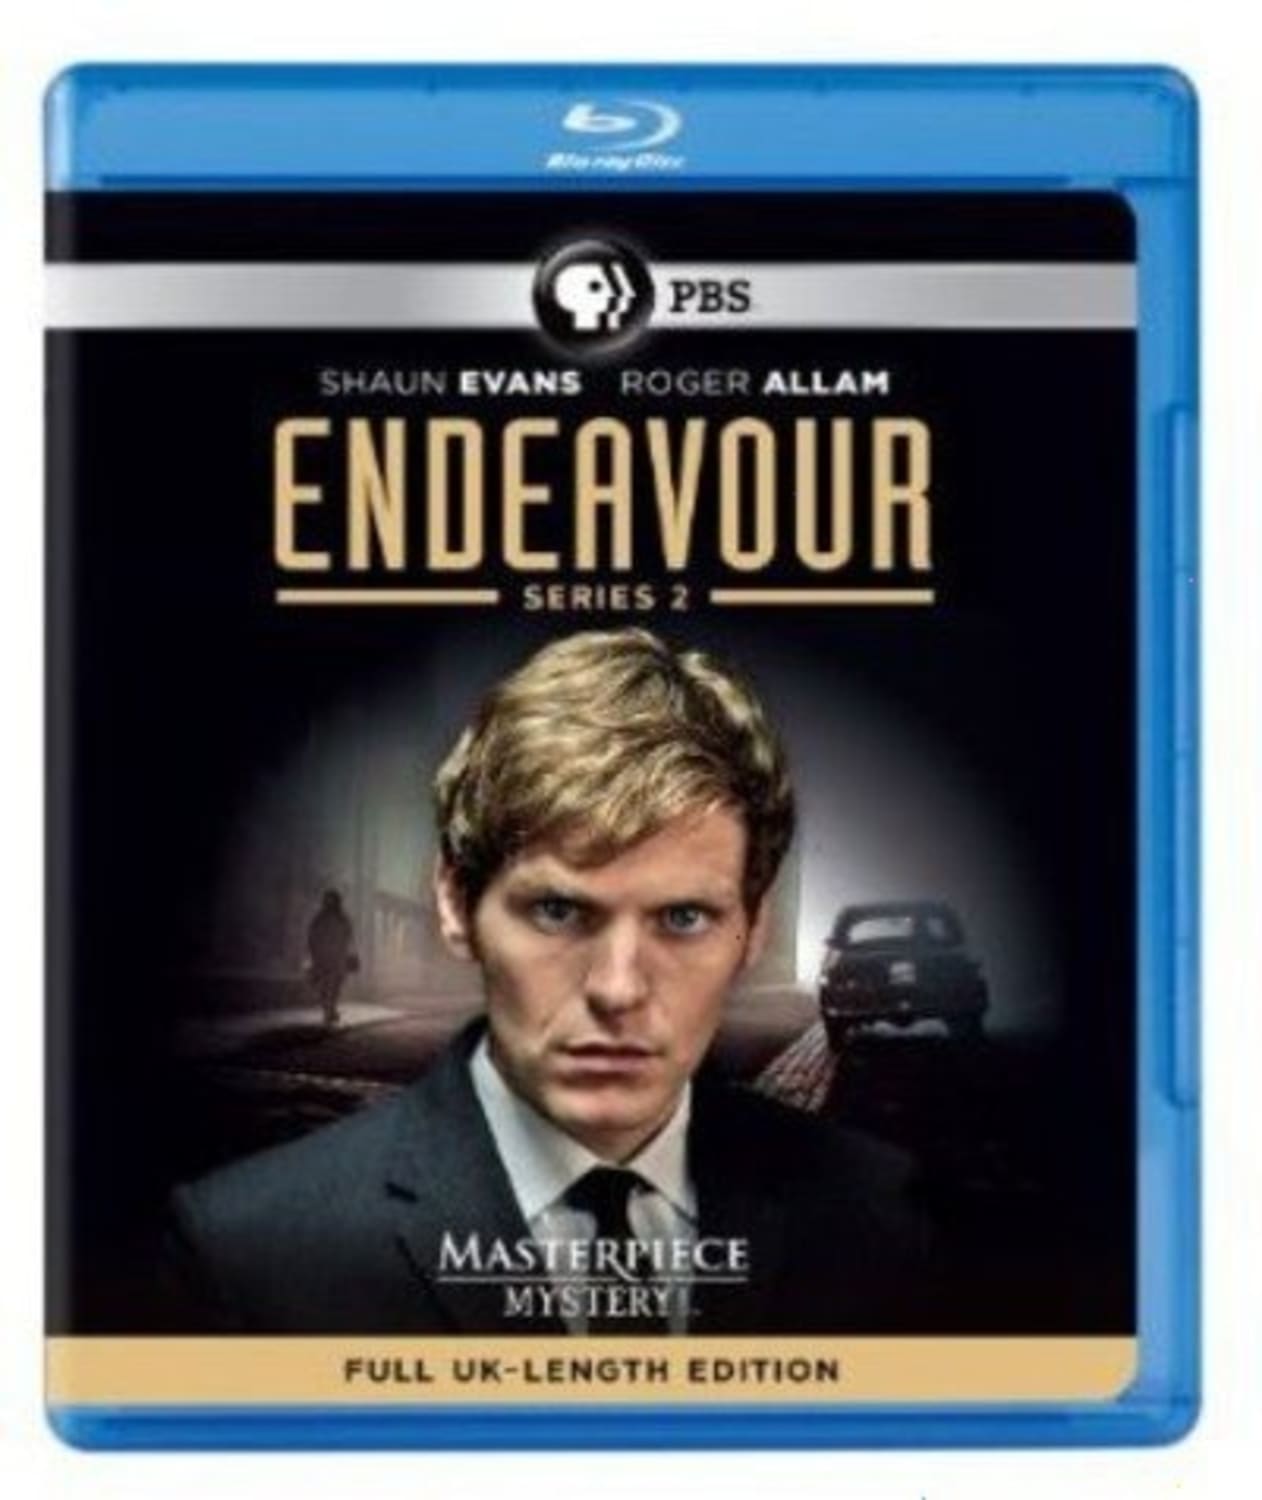 Masterpiece Mystery: Endeavour Series 2 (Blu-ray) on MovieShack